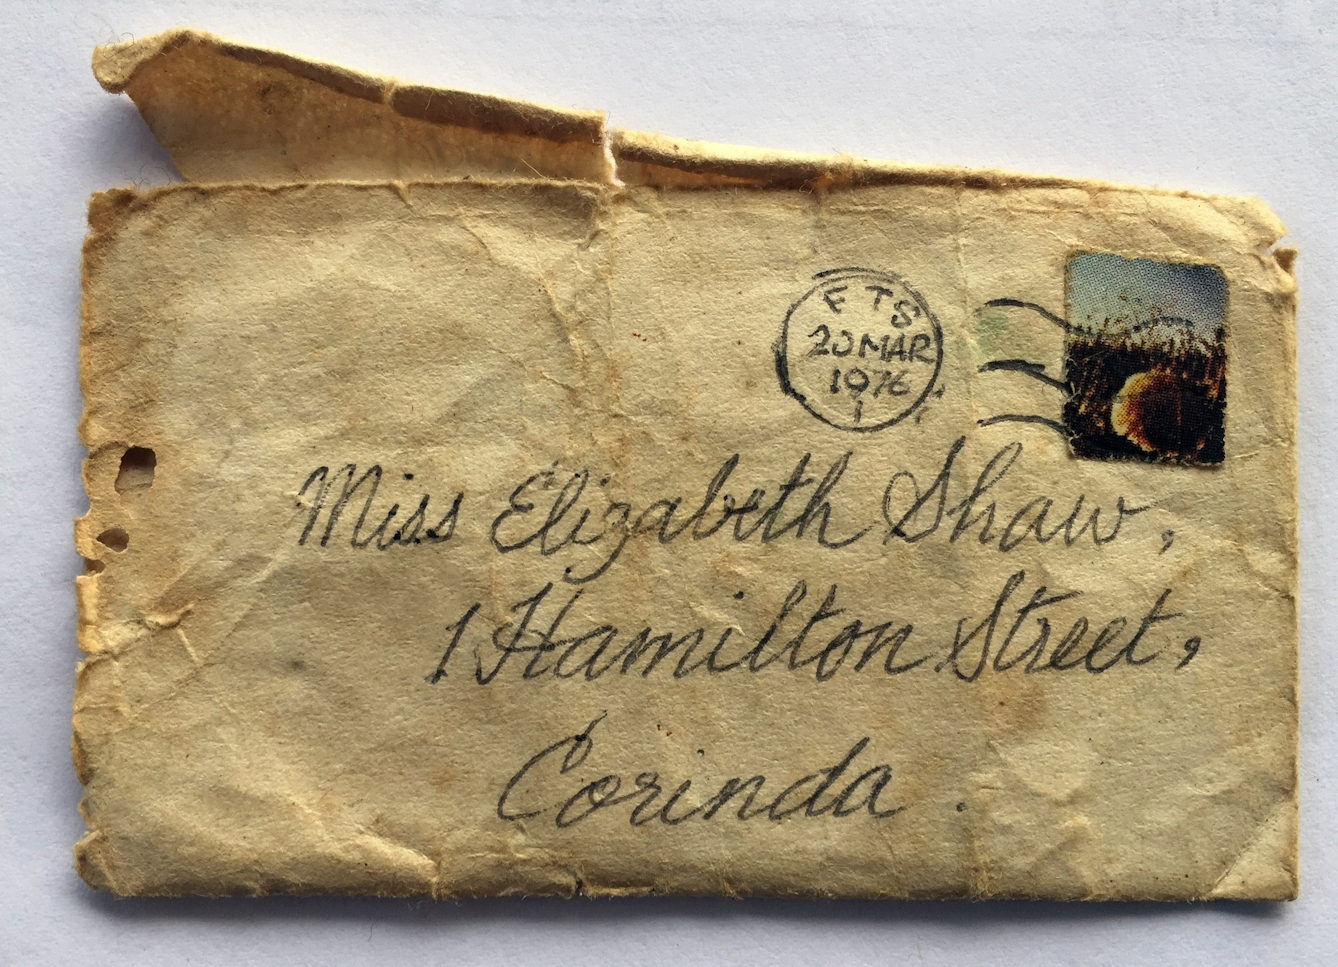 Reads: Miss Elizabeth Shaw, 1 Hamilton Street, Corinda. Handwritten in black ink. Pretend postmark reads: FTS (Fairy Tooth Service), 20 March 1976.